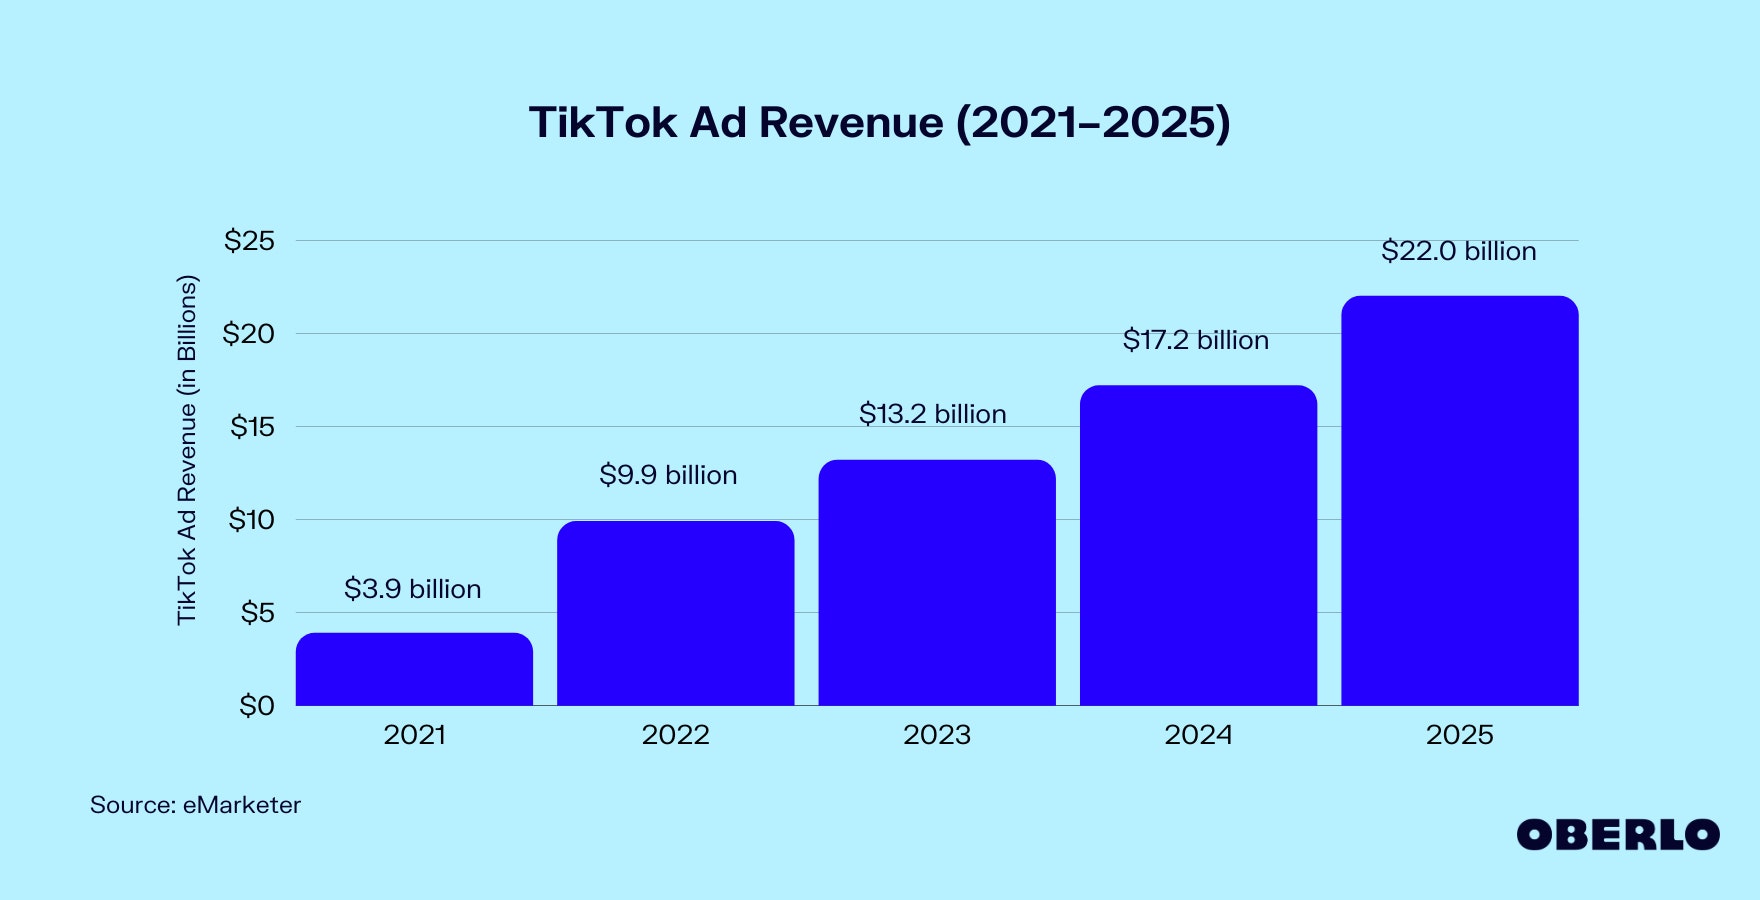 Chart of TikTok Ad Revenue (2019–2024)